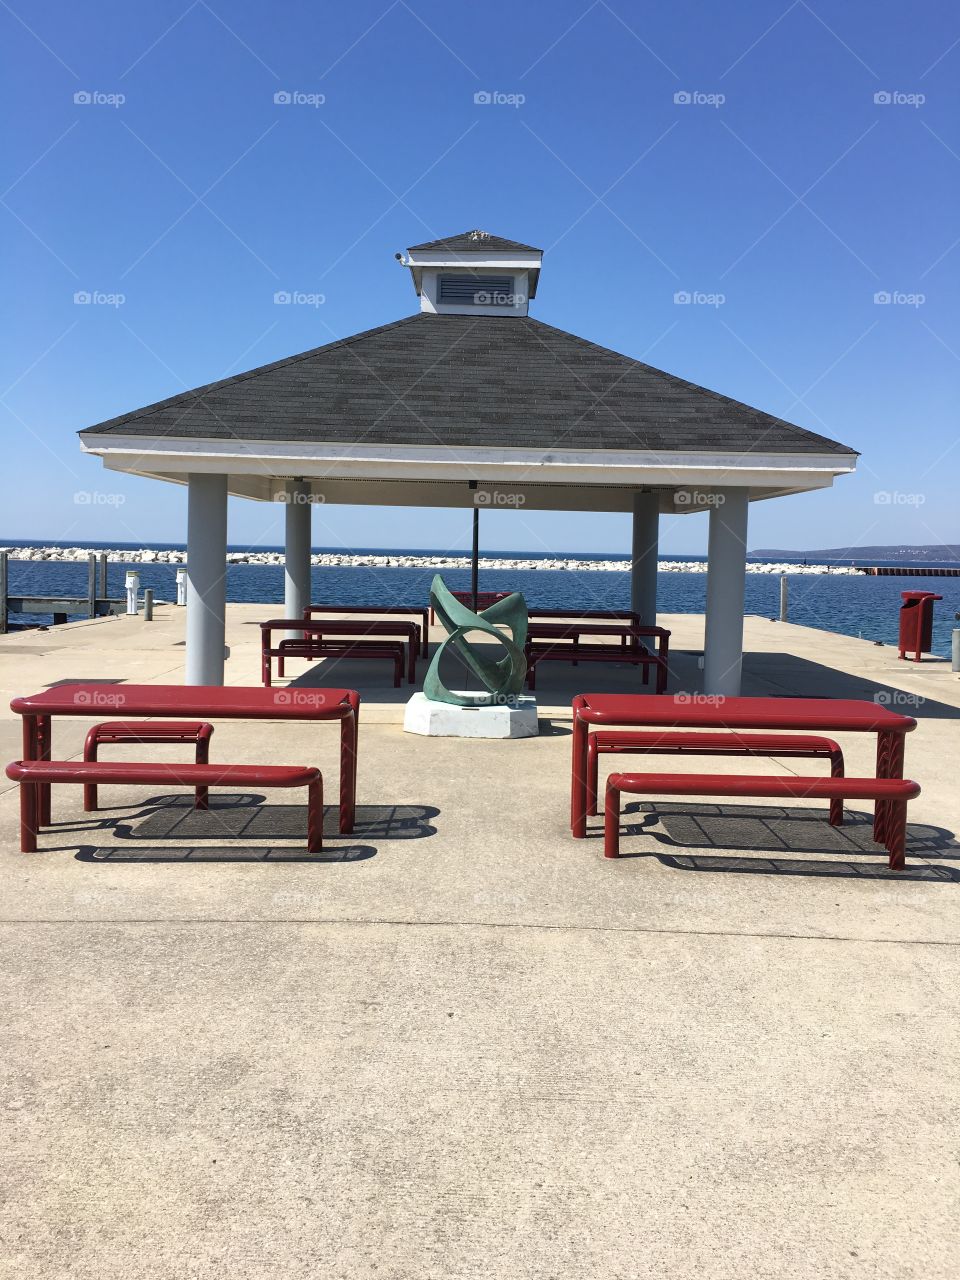 Chair, No Person, Beach, Travel, Water